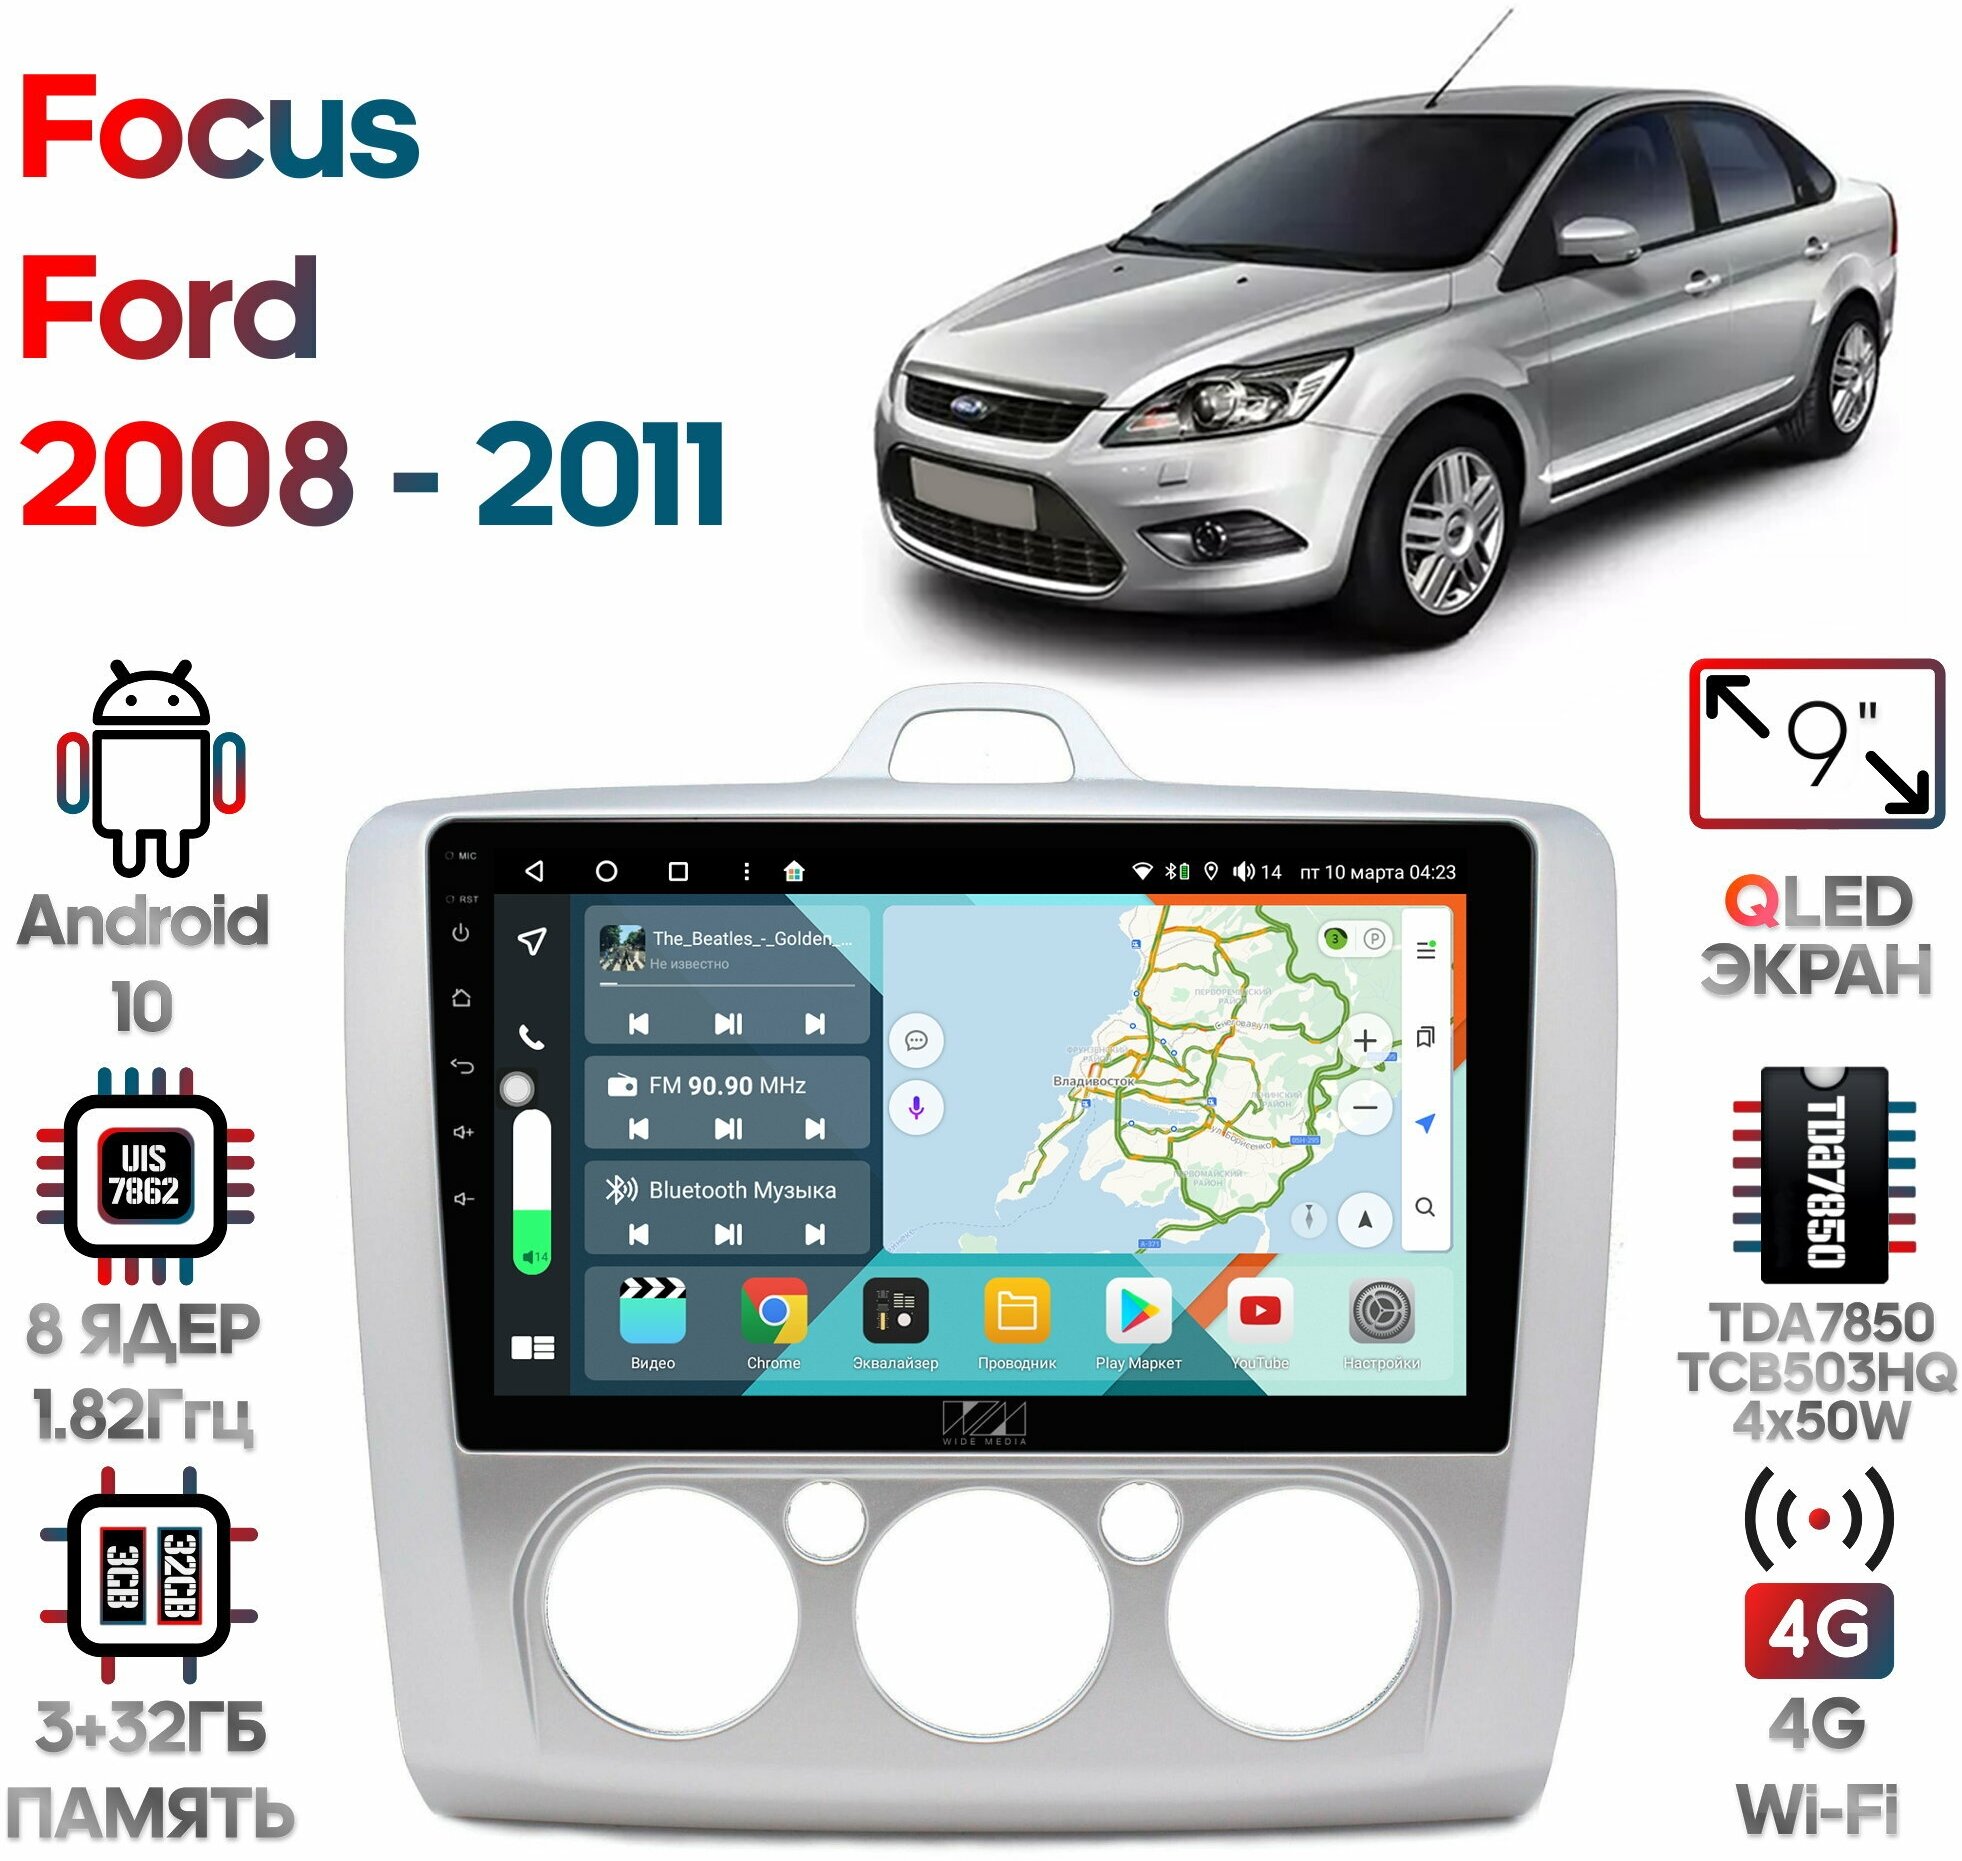 Штатная магнитола Wide Media Ford Focus 2008 - 2011 [Android 10, 9 дюймов, 3/32GB, 8 ядер, TDA7850, DSP, SPDIF, QLED, 1280*720]